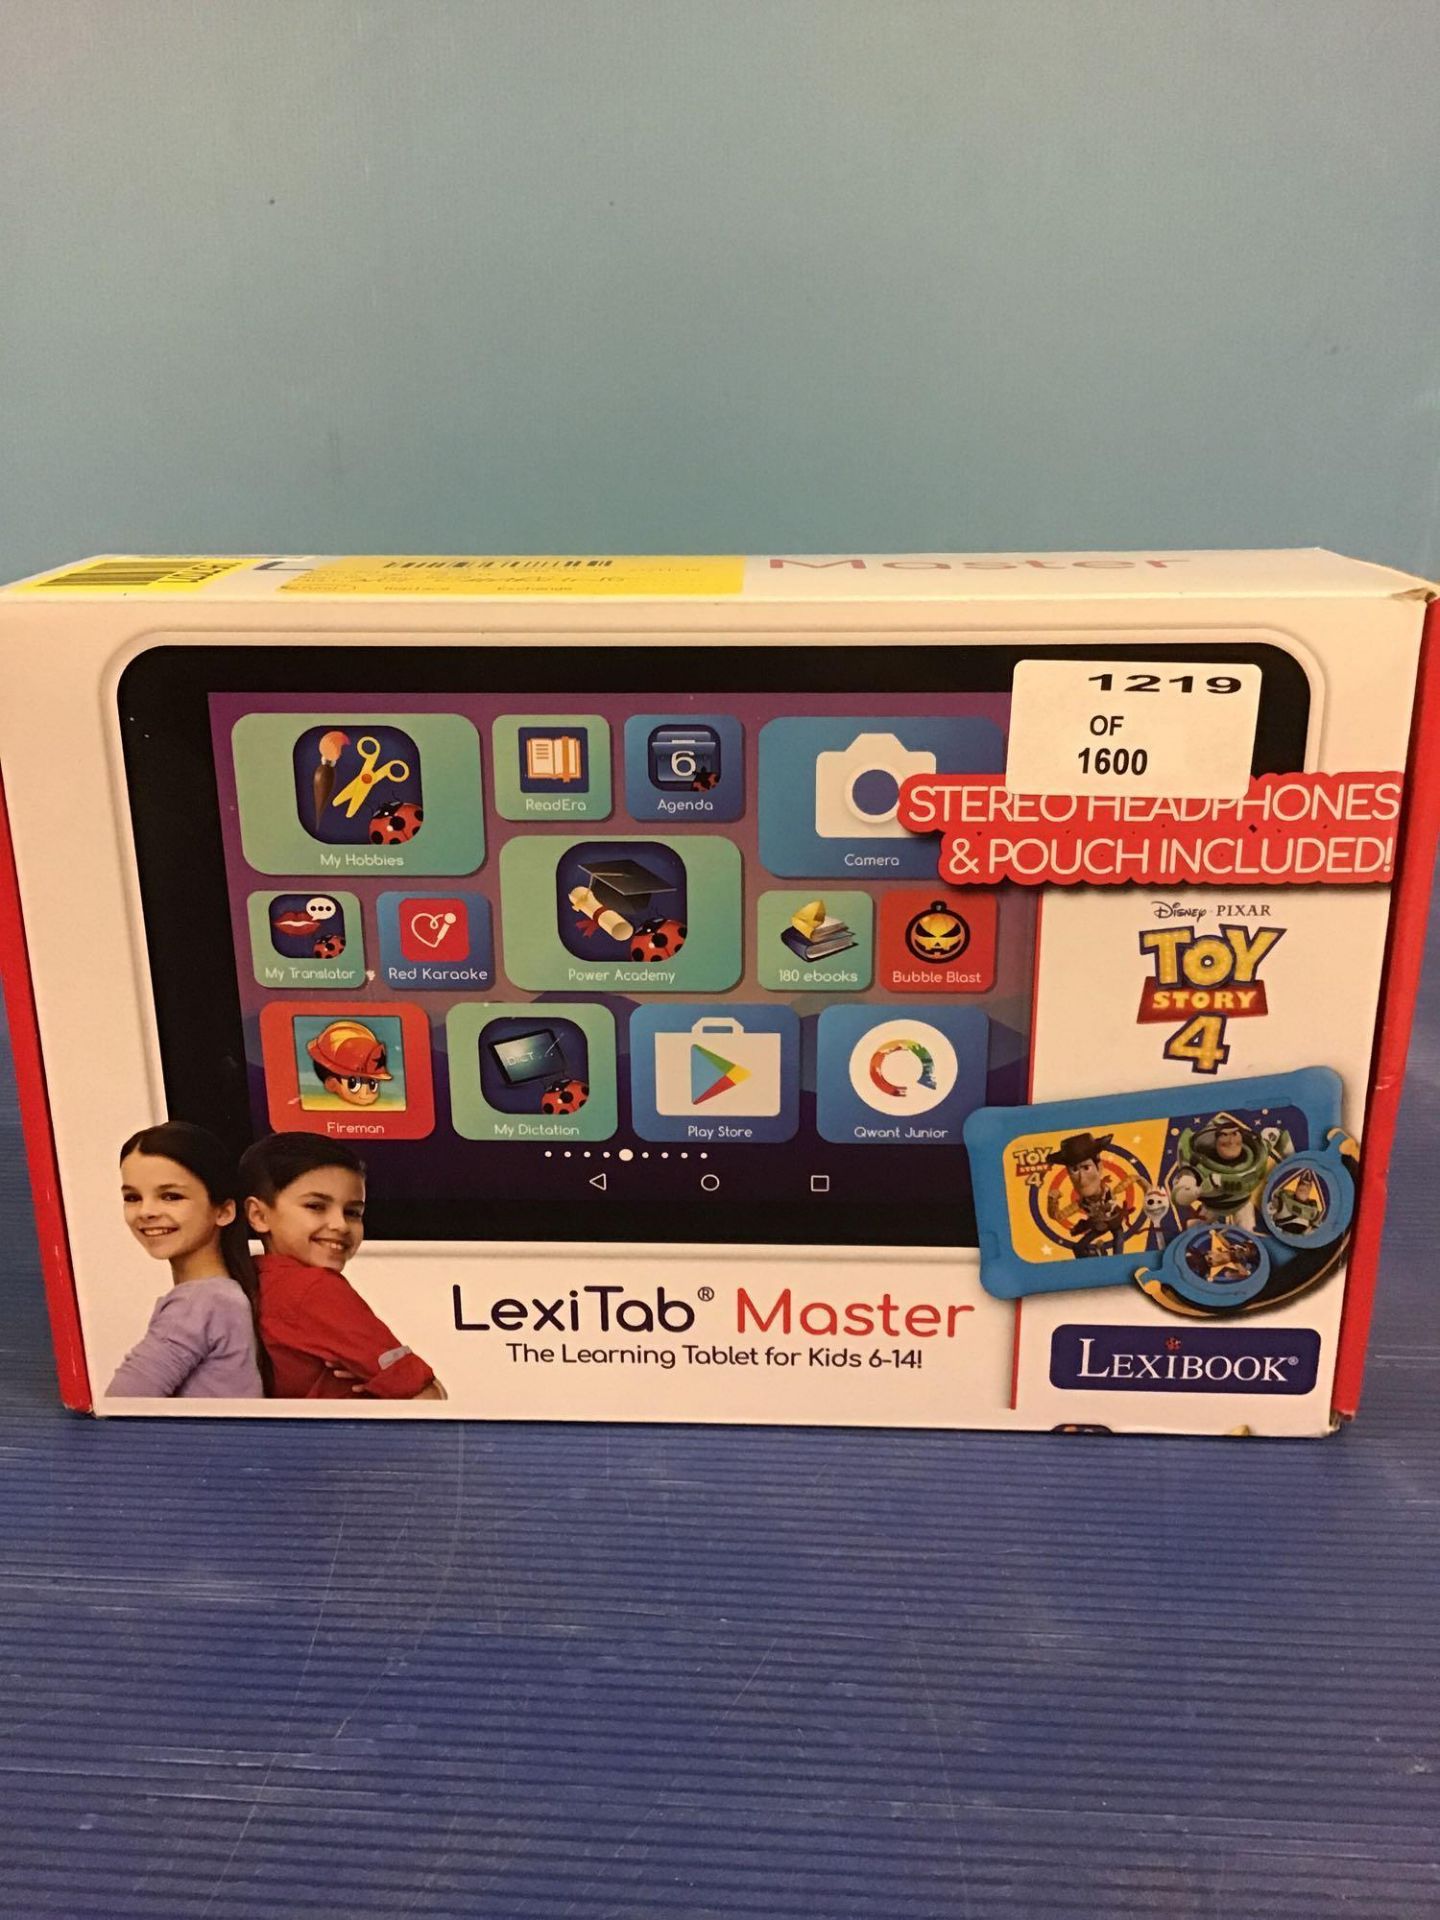 Lexibook LexiTab Master 7' Kids Tablet│Disney Toy Story 4 Case│Headphone│£55.00 RRP - Image 2 of 5